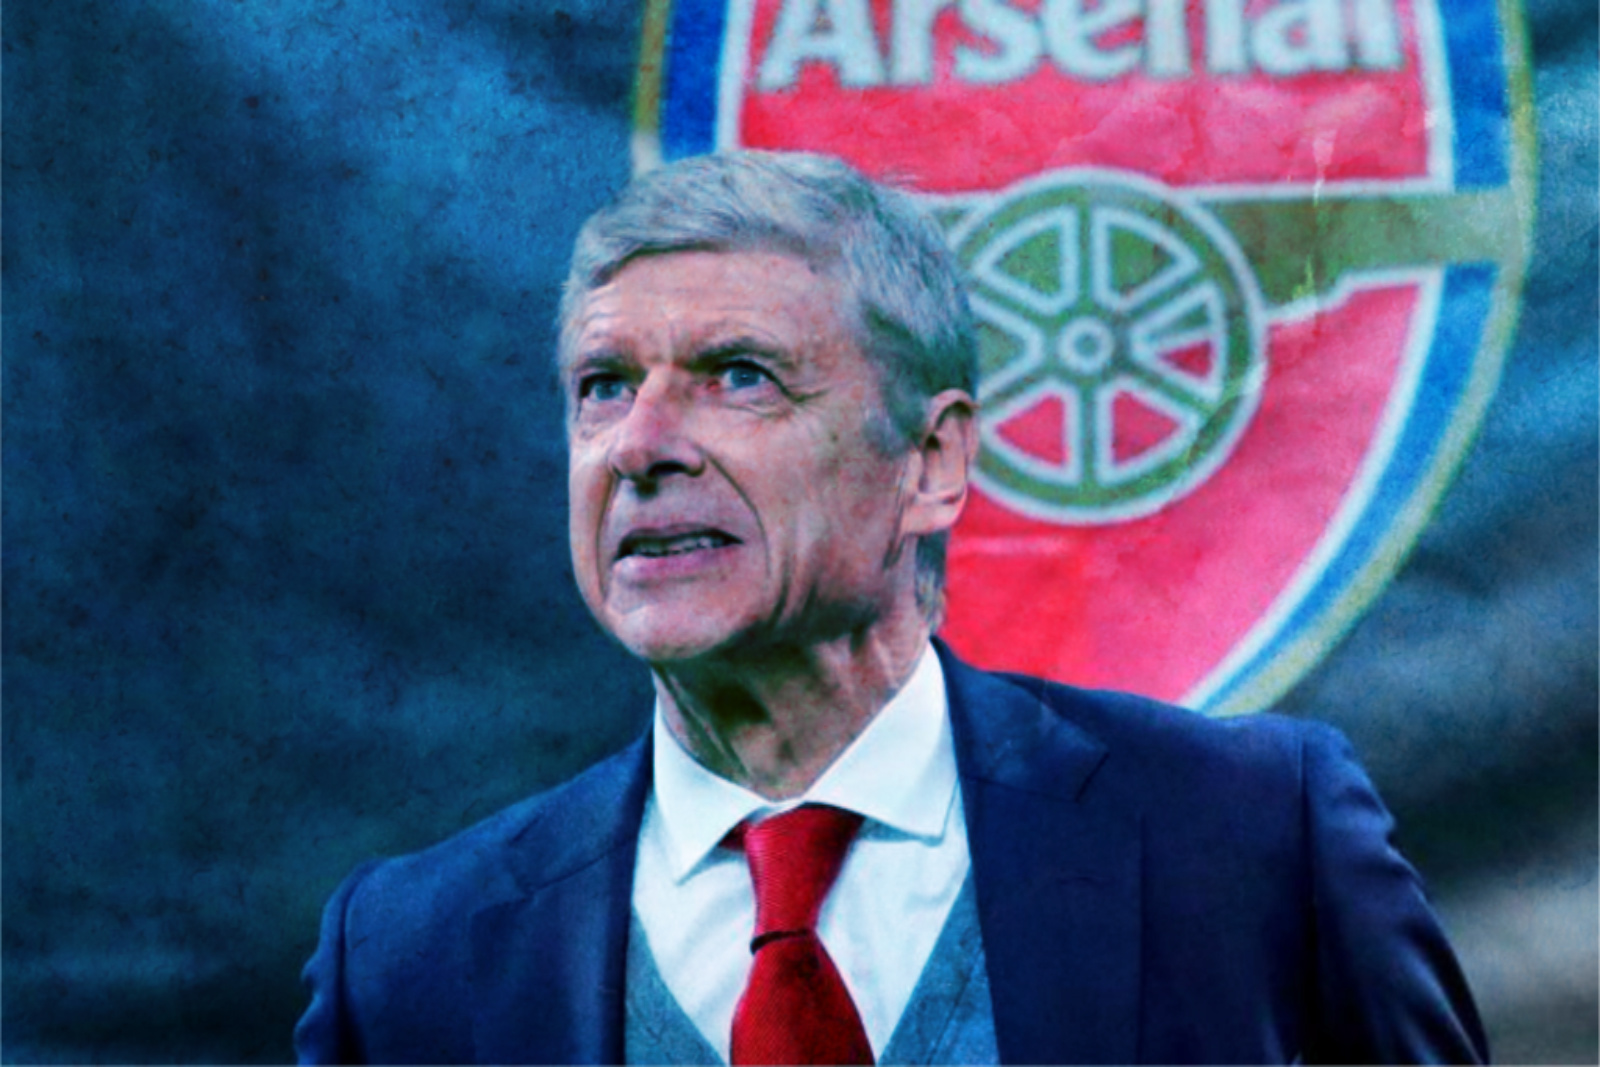 Photo – Arsene Wenger rocks Arsenal merchandise while taking a walk in London amid COVID-19 outbreak